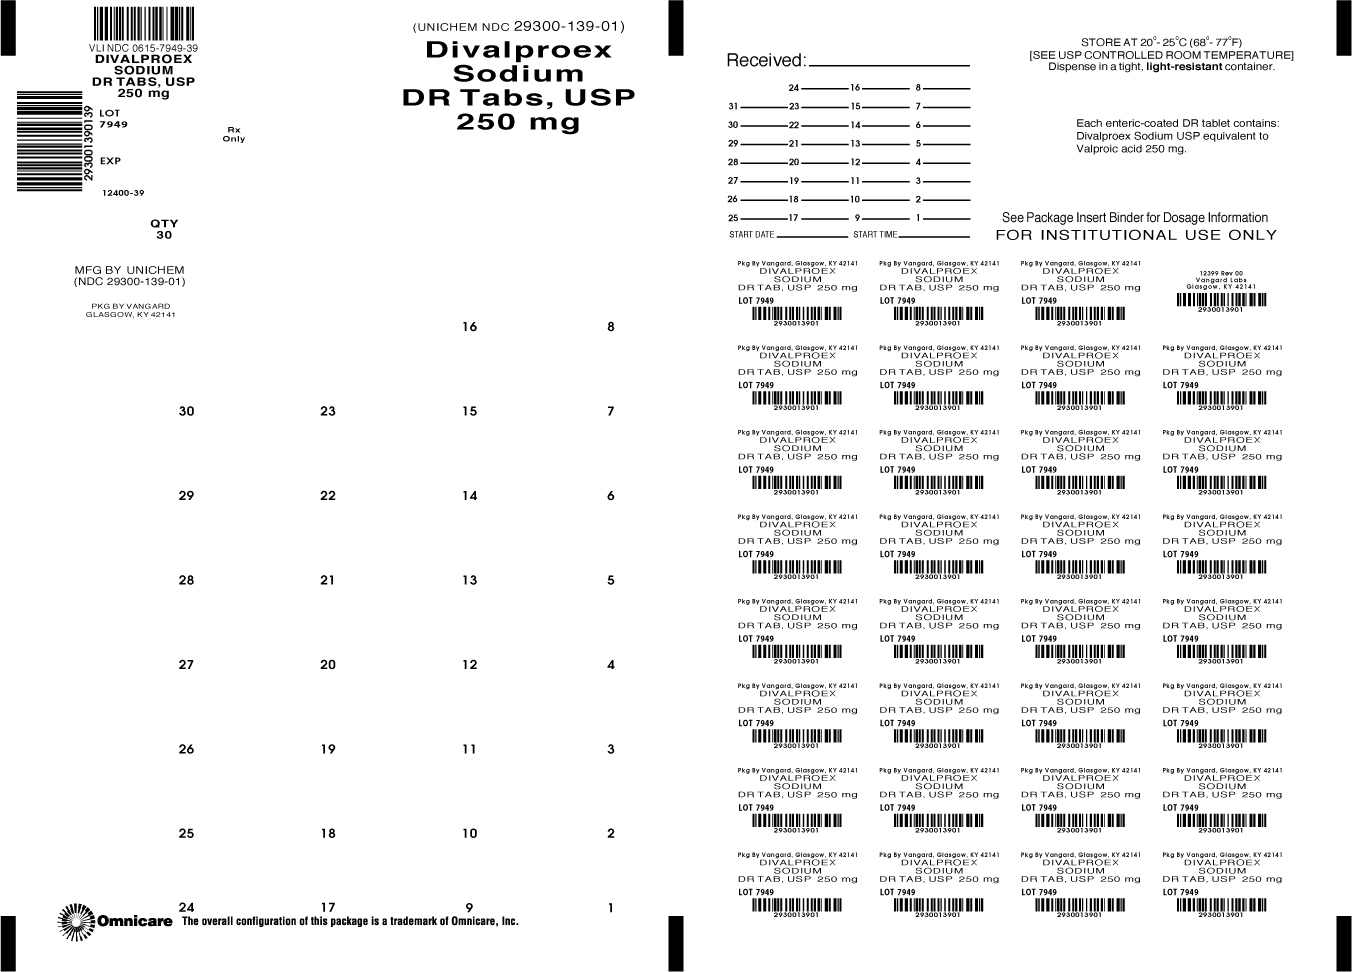 Divalproex Sodium DR Tabs 250mg bingo card label